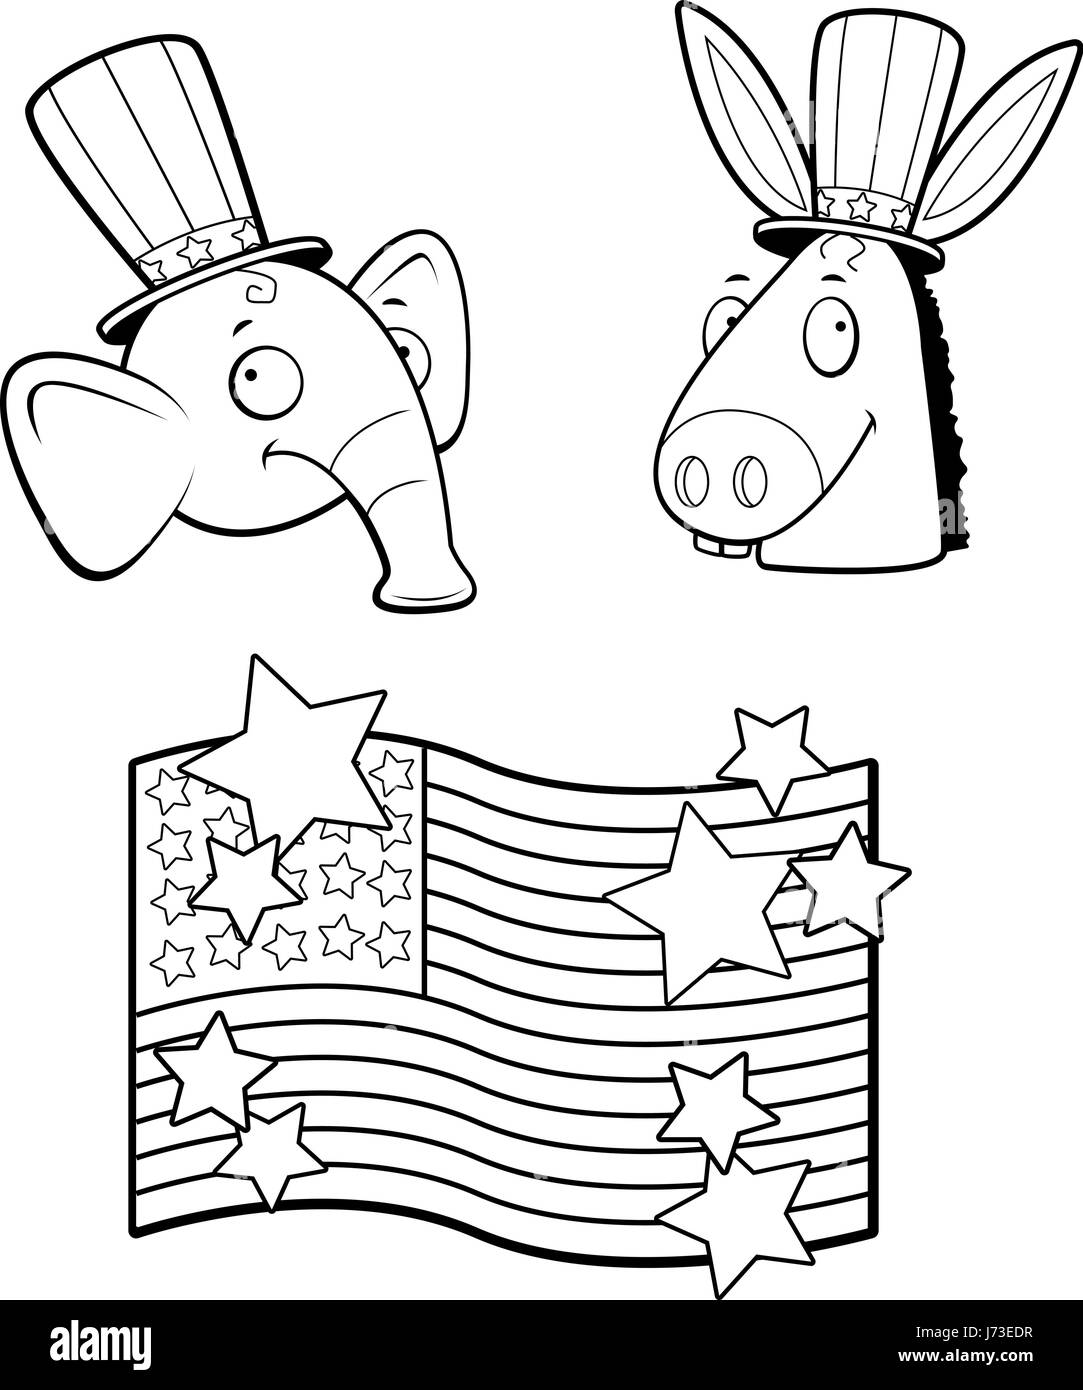 Political cartoon donkey elephant Stock Vector Images - Alamy